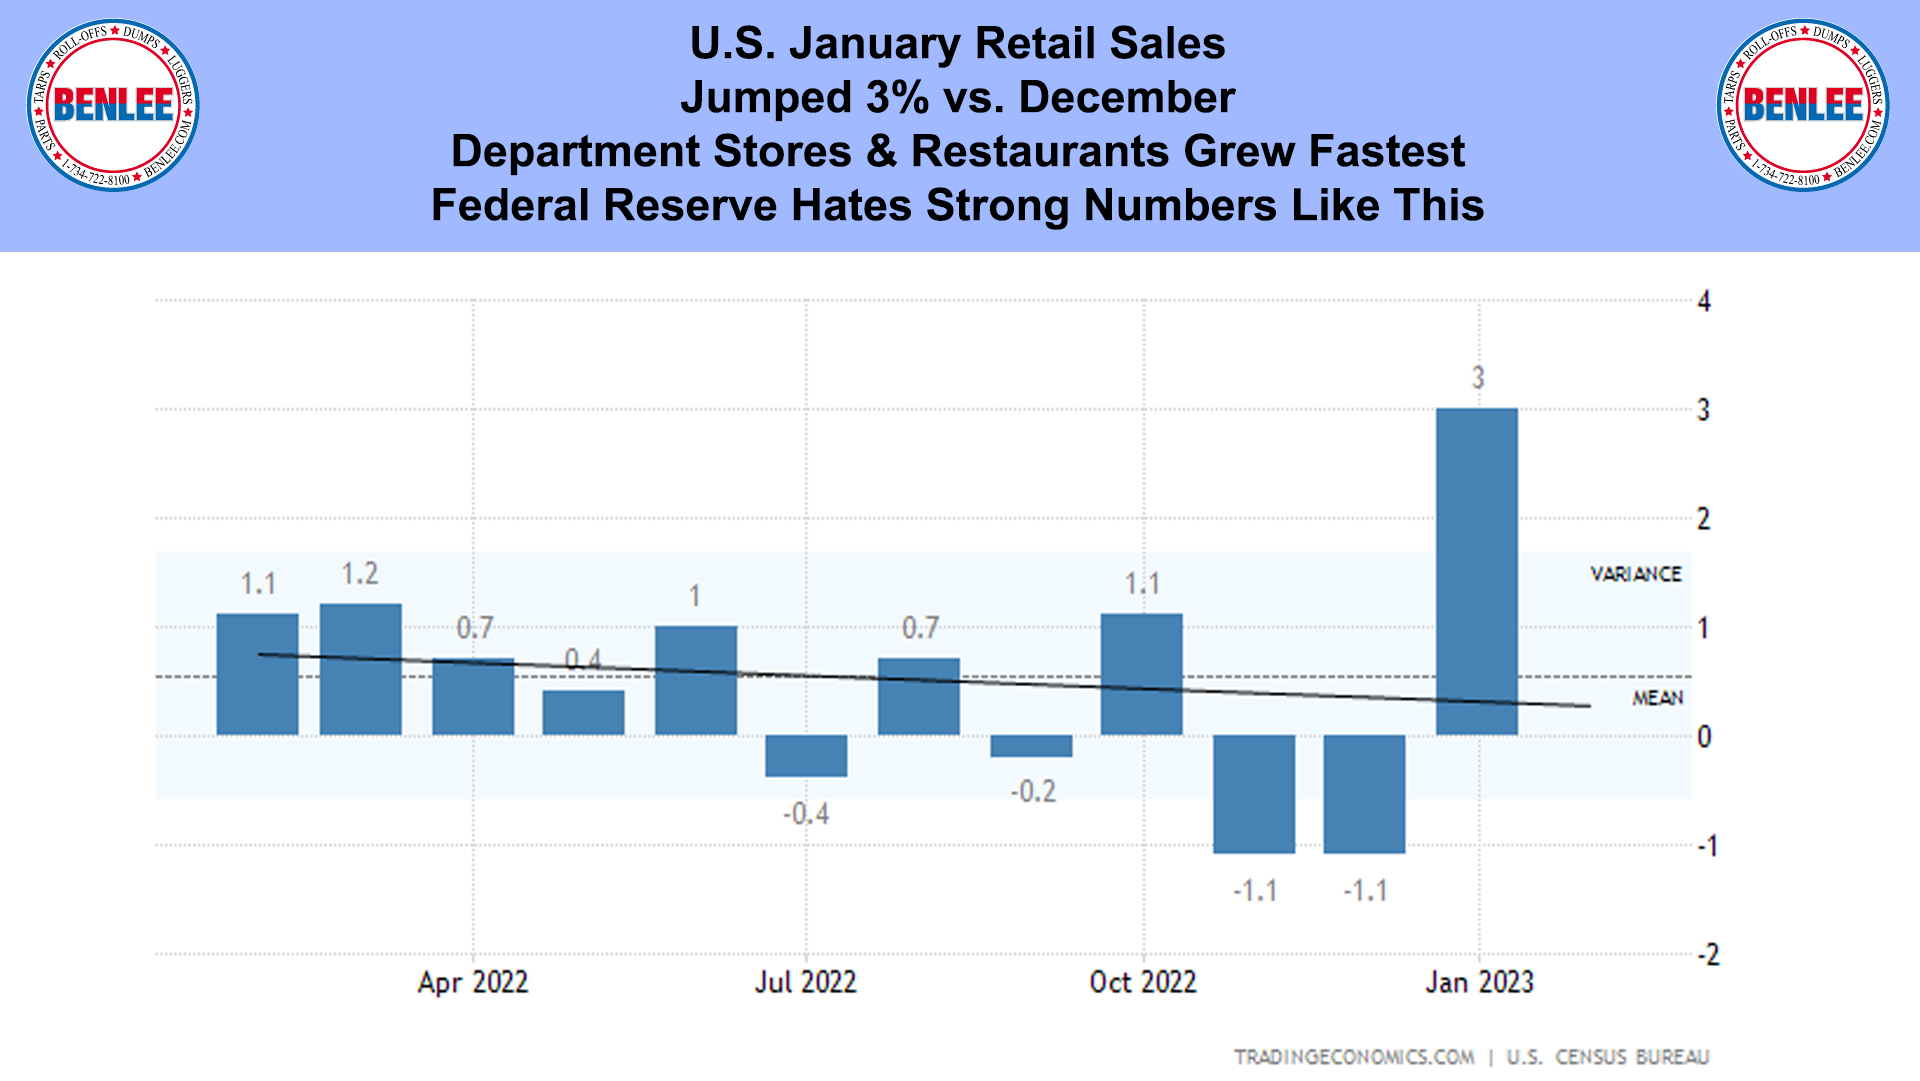 U.S. January Retail Sales